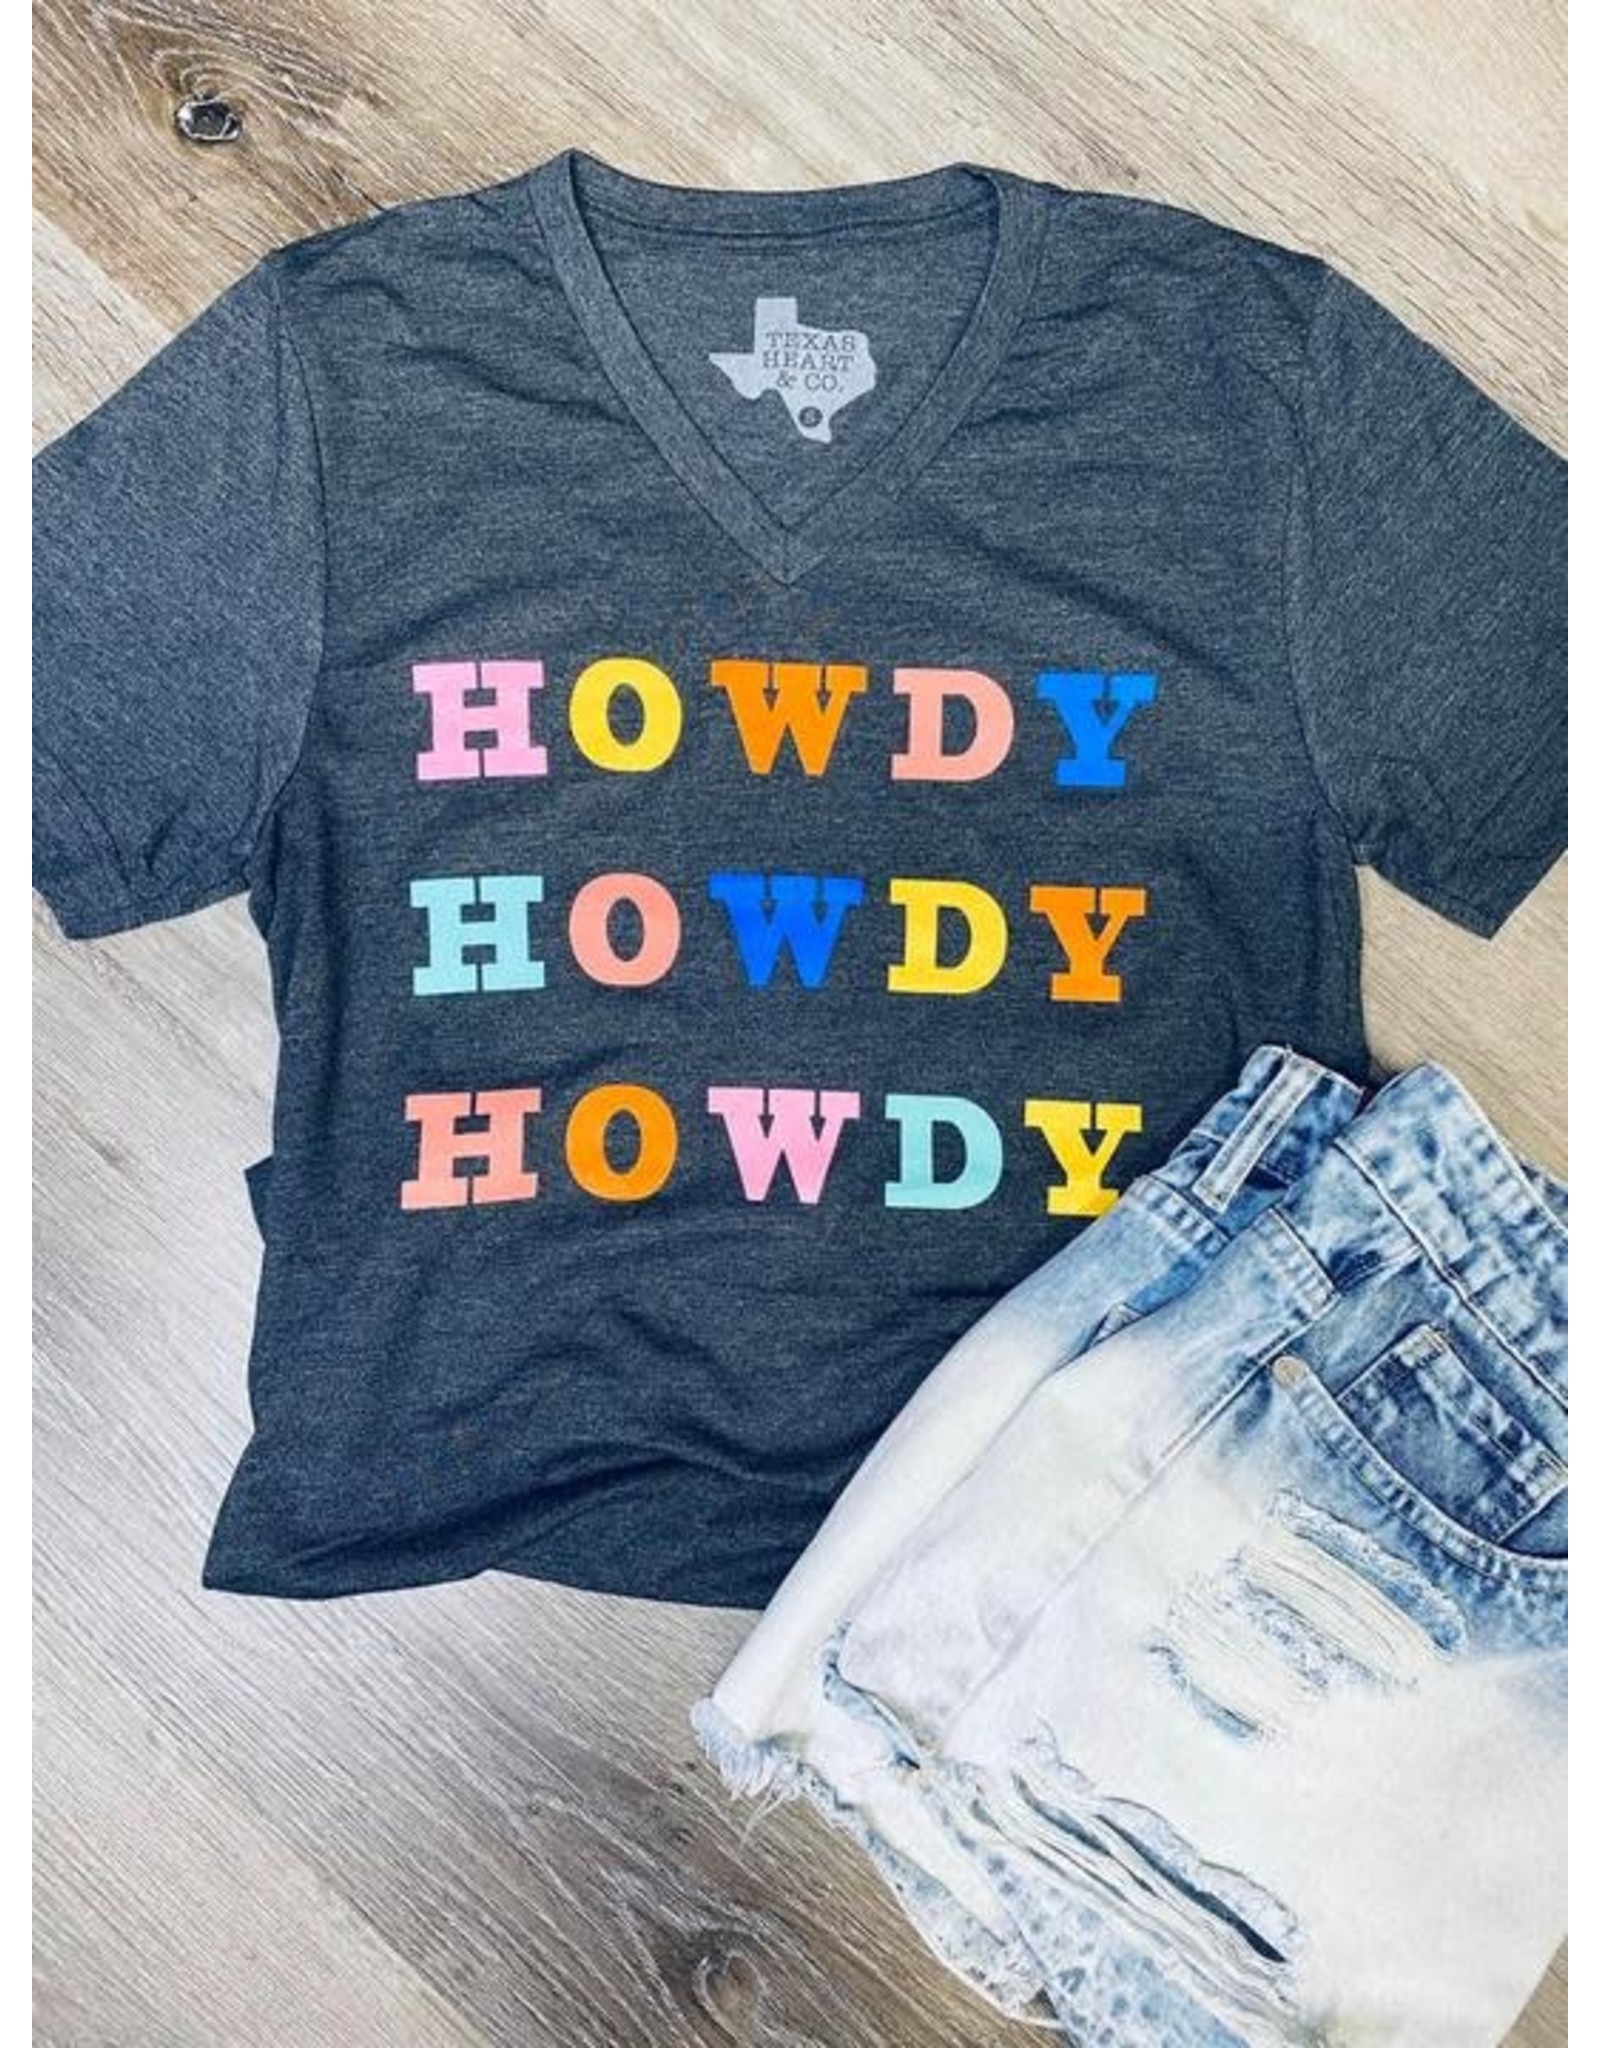 Texas Heart Co Howdy T-Shirt